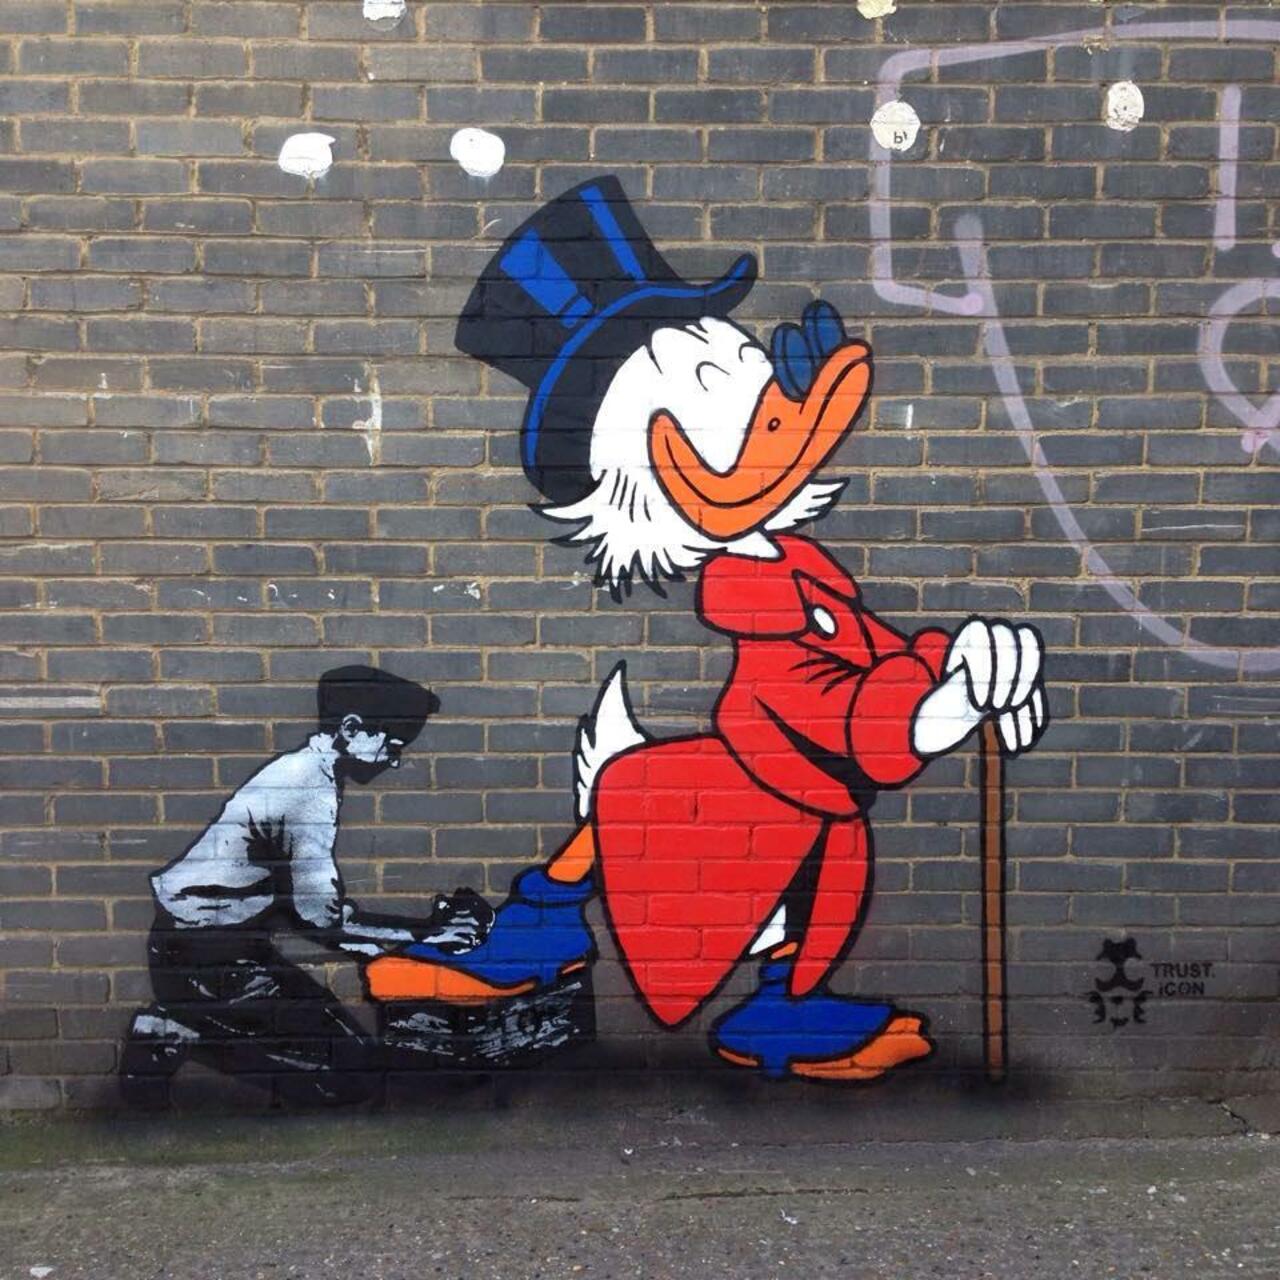 'Shine Box' 
New Street Art by iCON in Bethnal Green, London 

#art #arte #graffiti #streetart http://t.co/X1KkAuvfDn